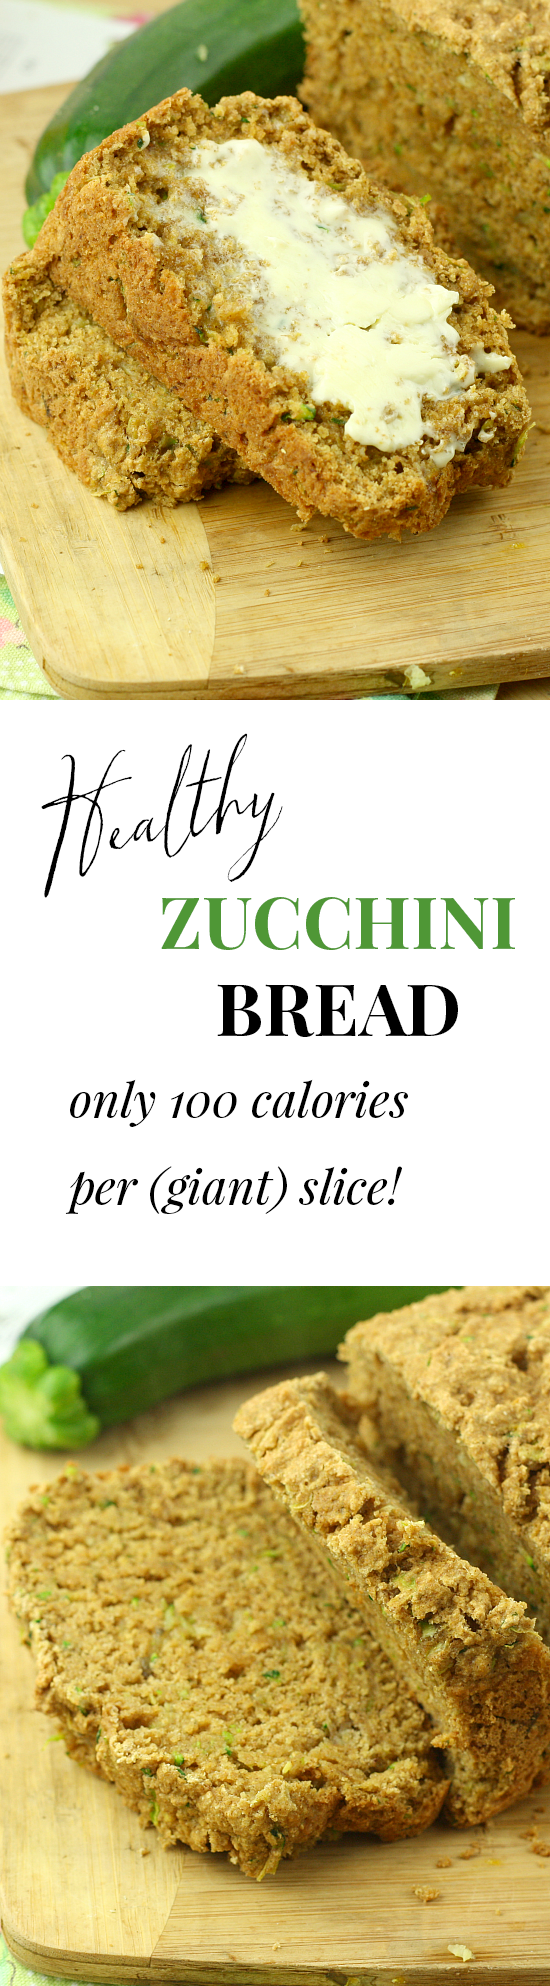 Zucchini Bread Pinterest